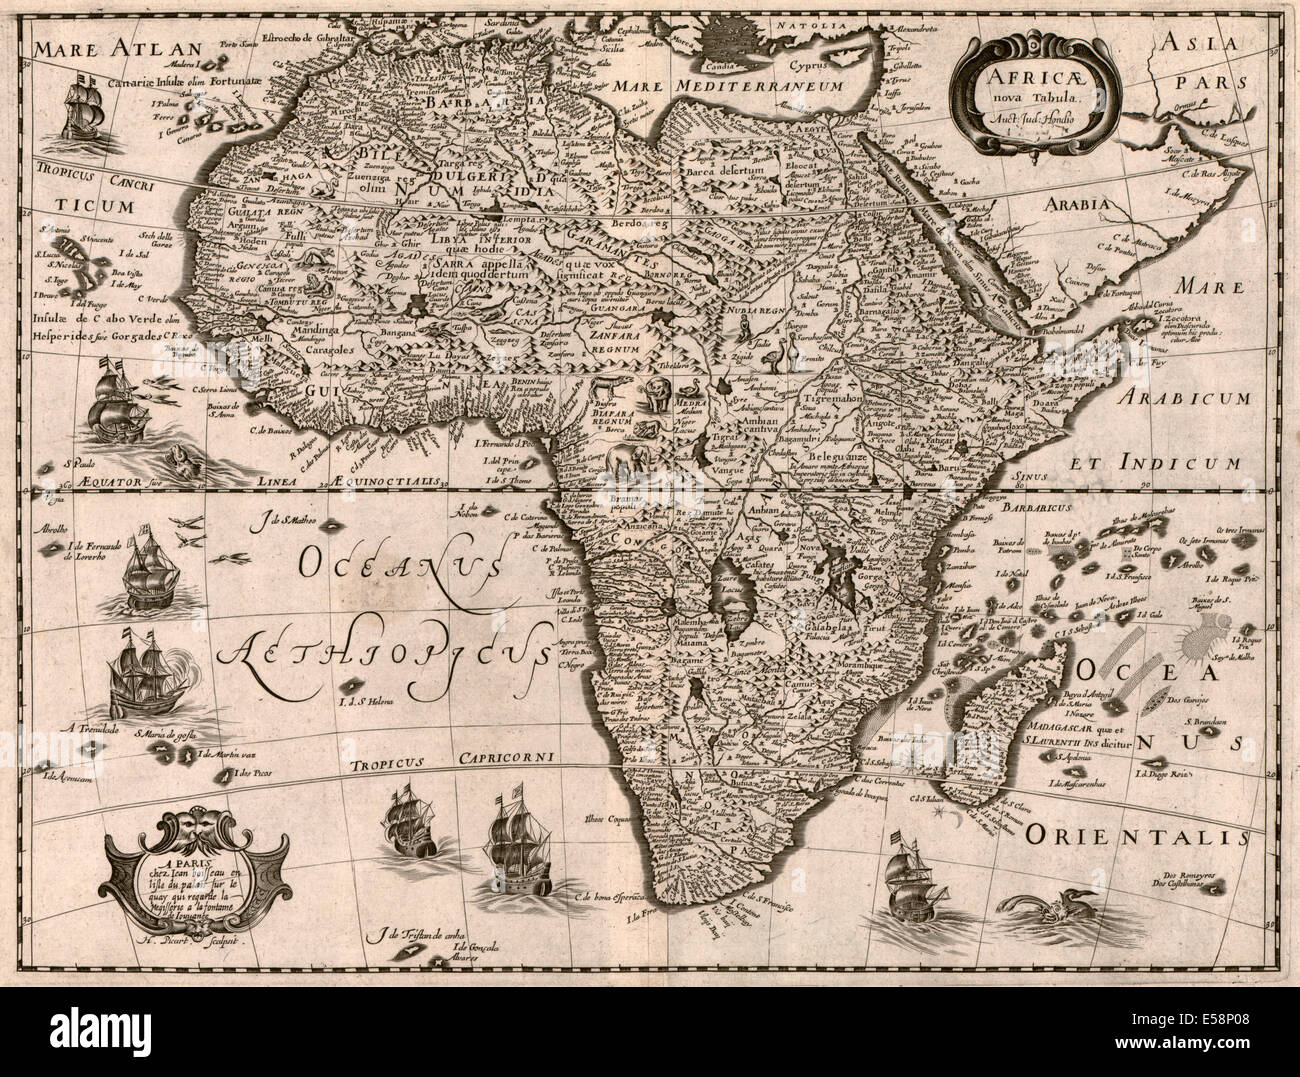 Africae nova tabula 1640 - The new board of Africa - map Stock Photo